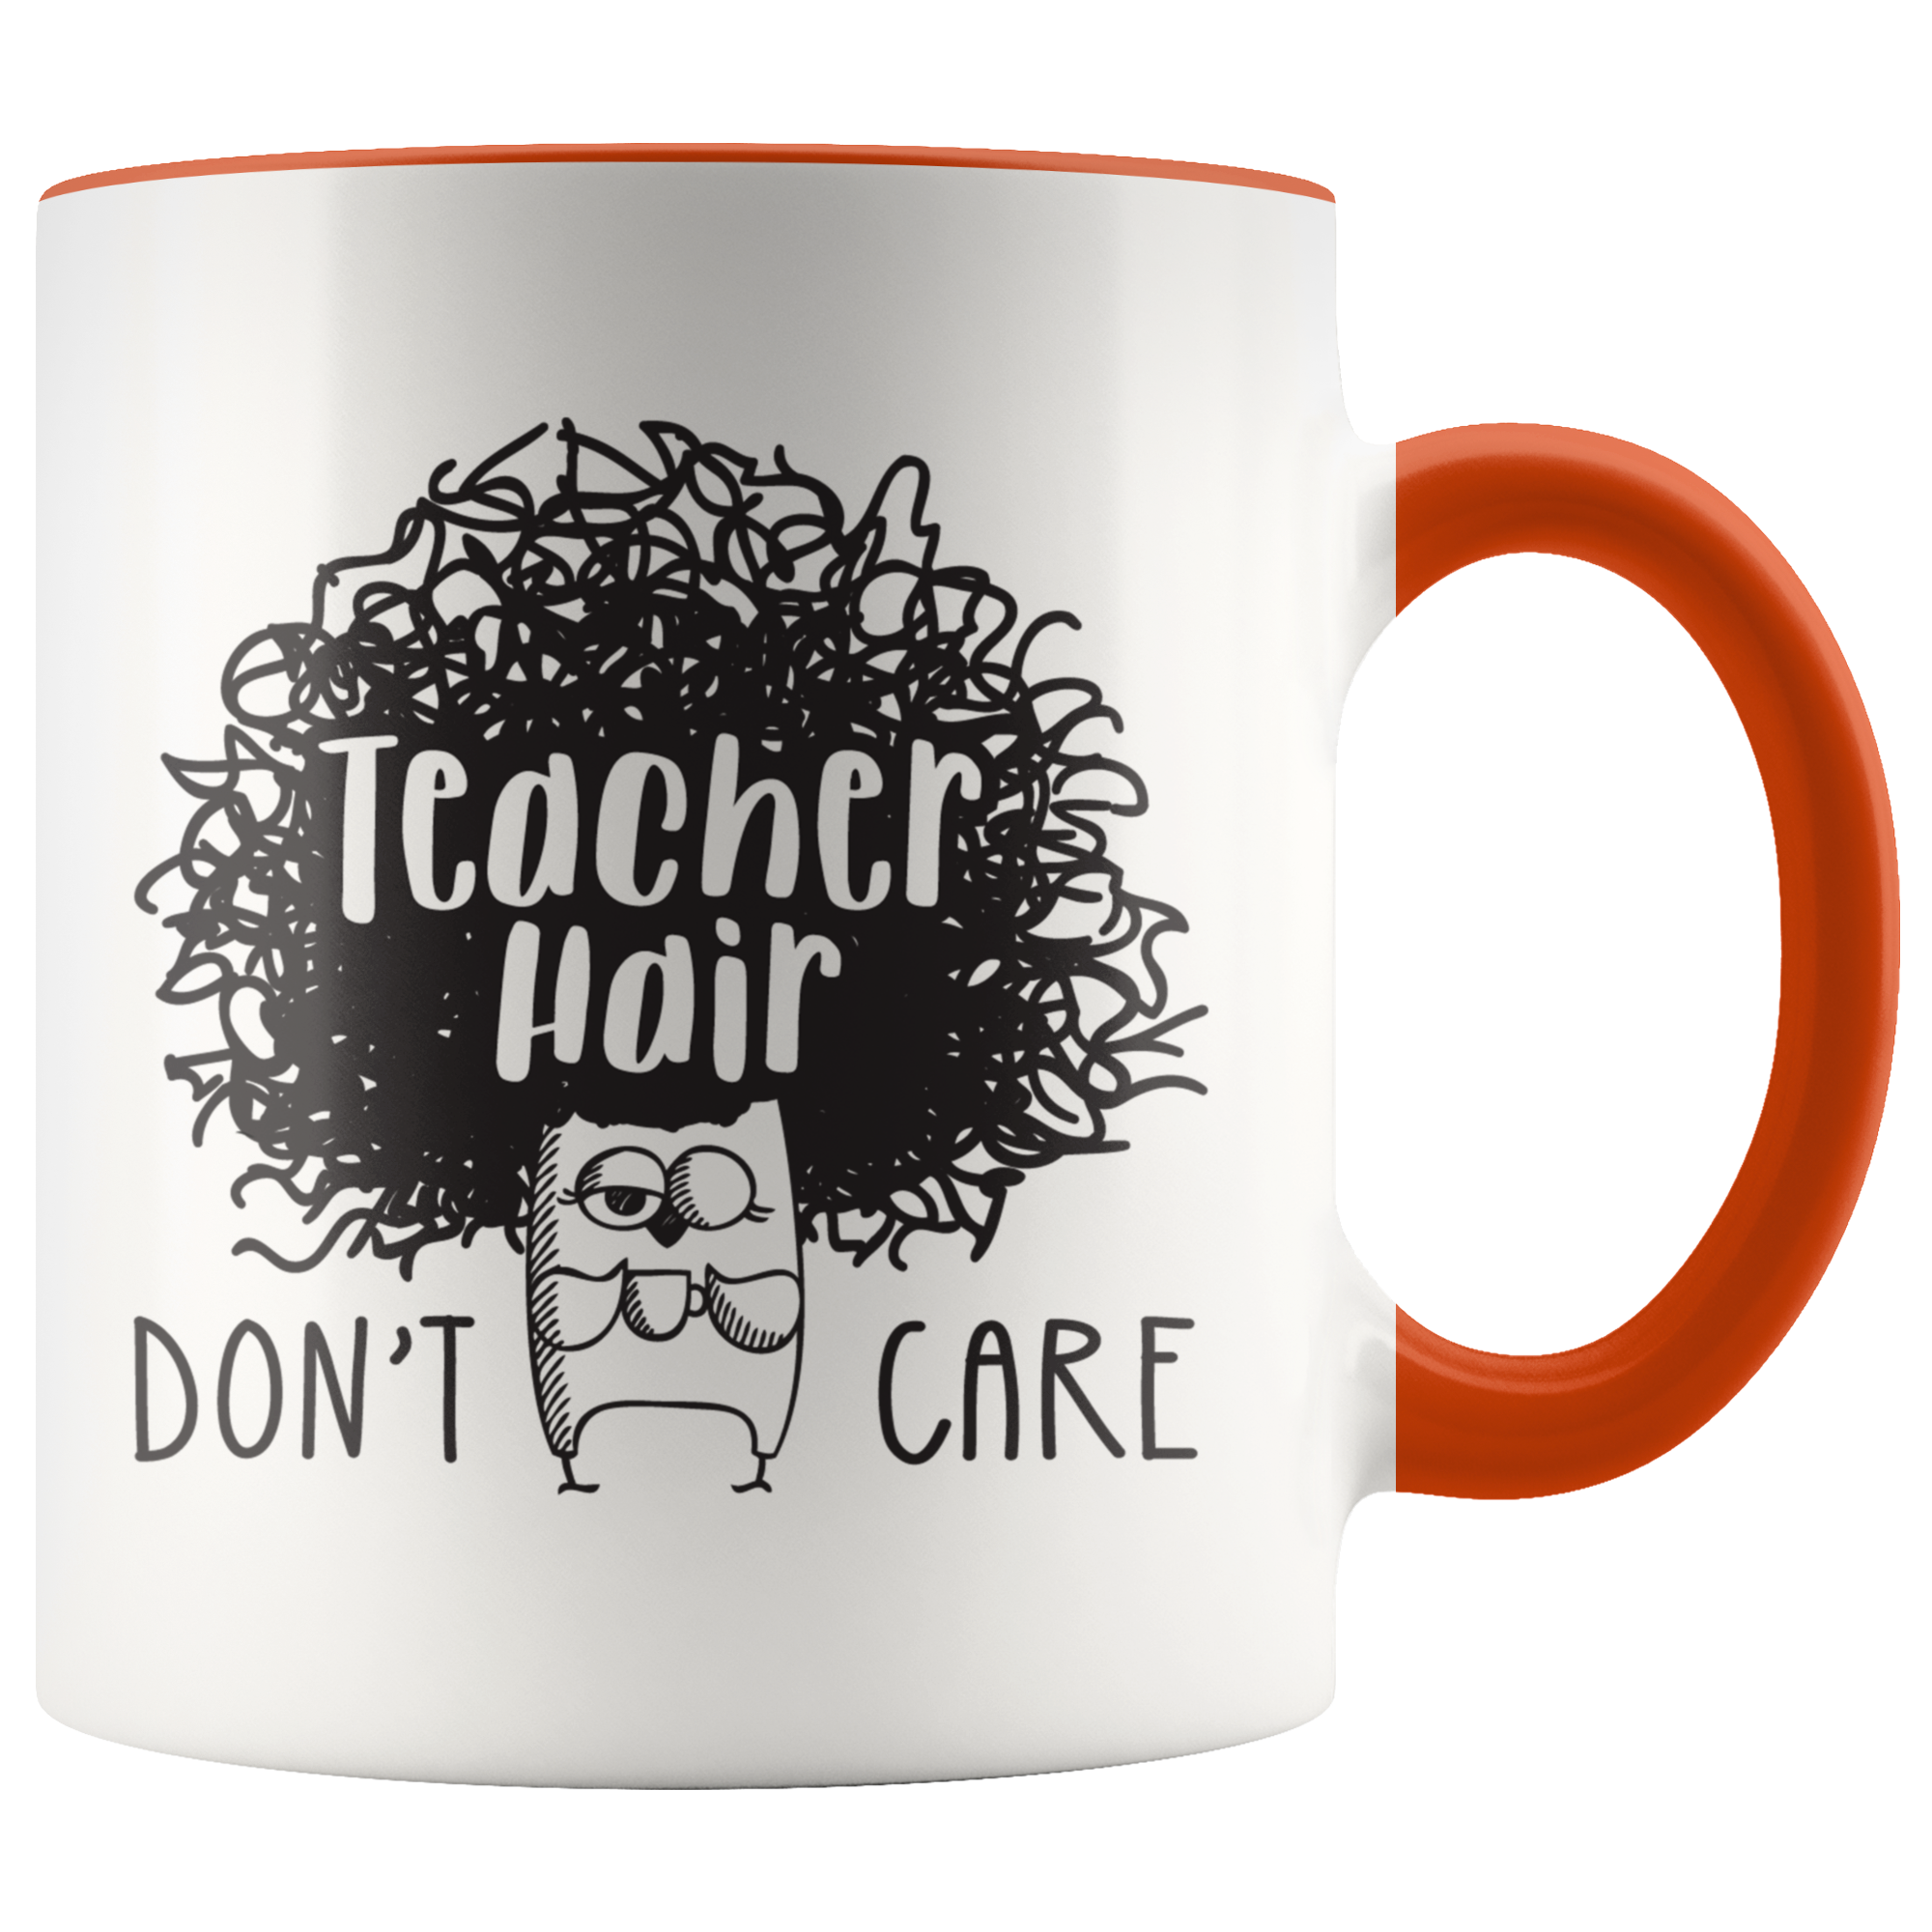 Teacher Hair Don't Care Coffee Mug